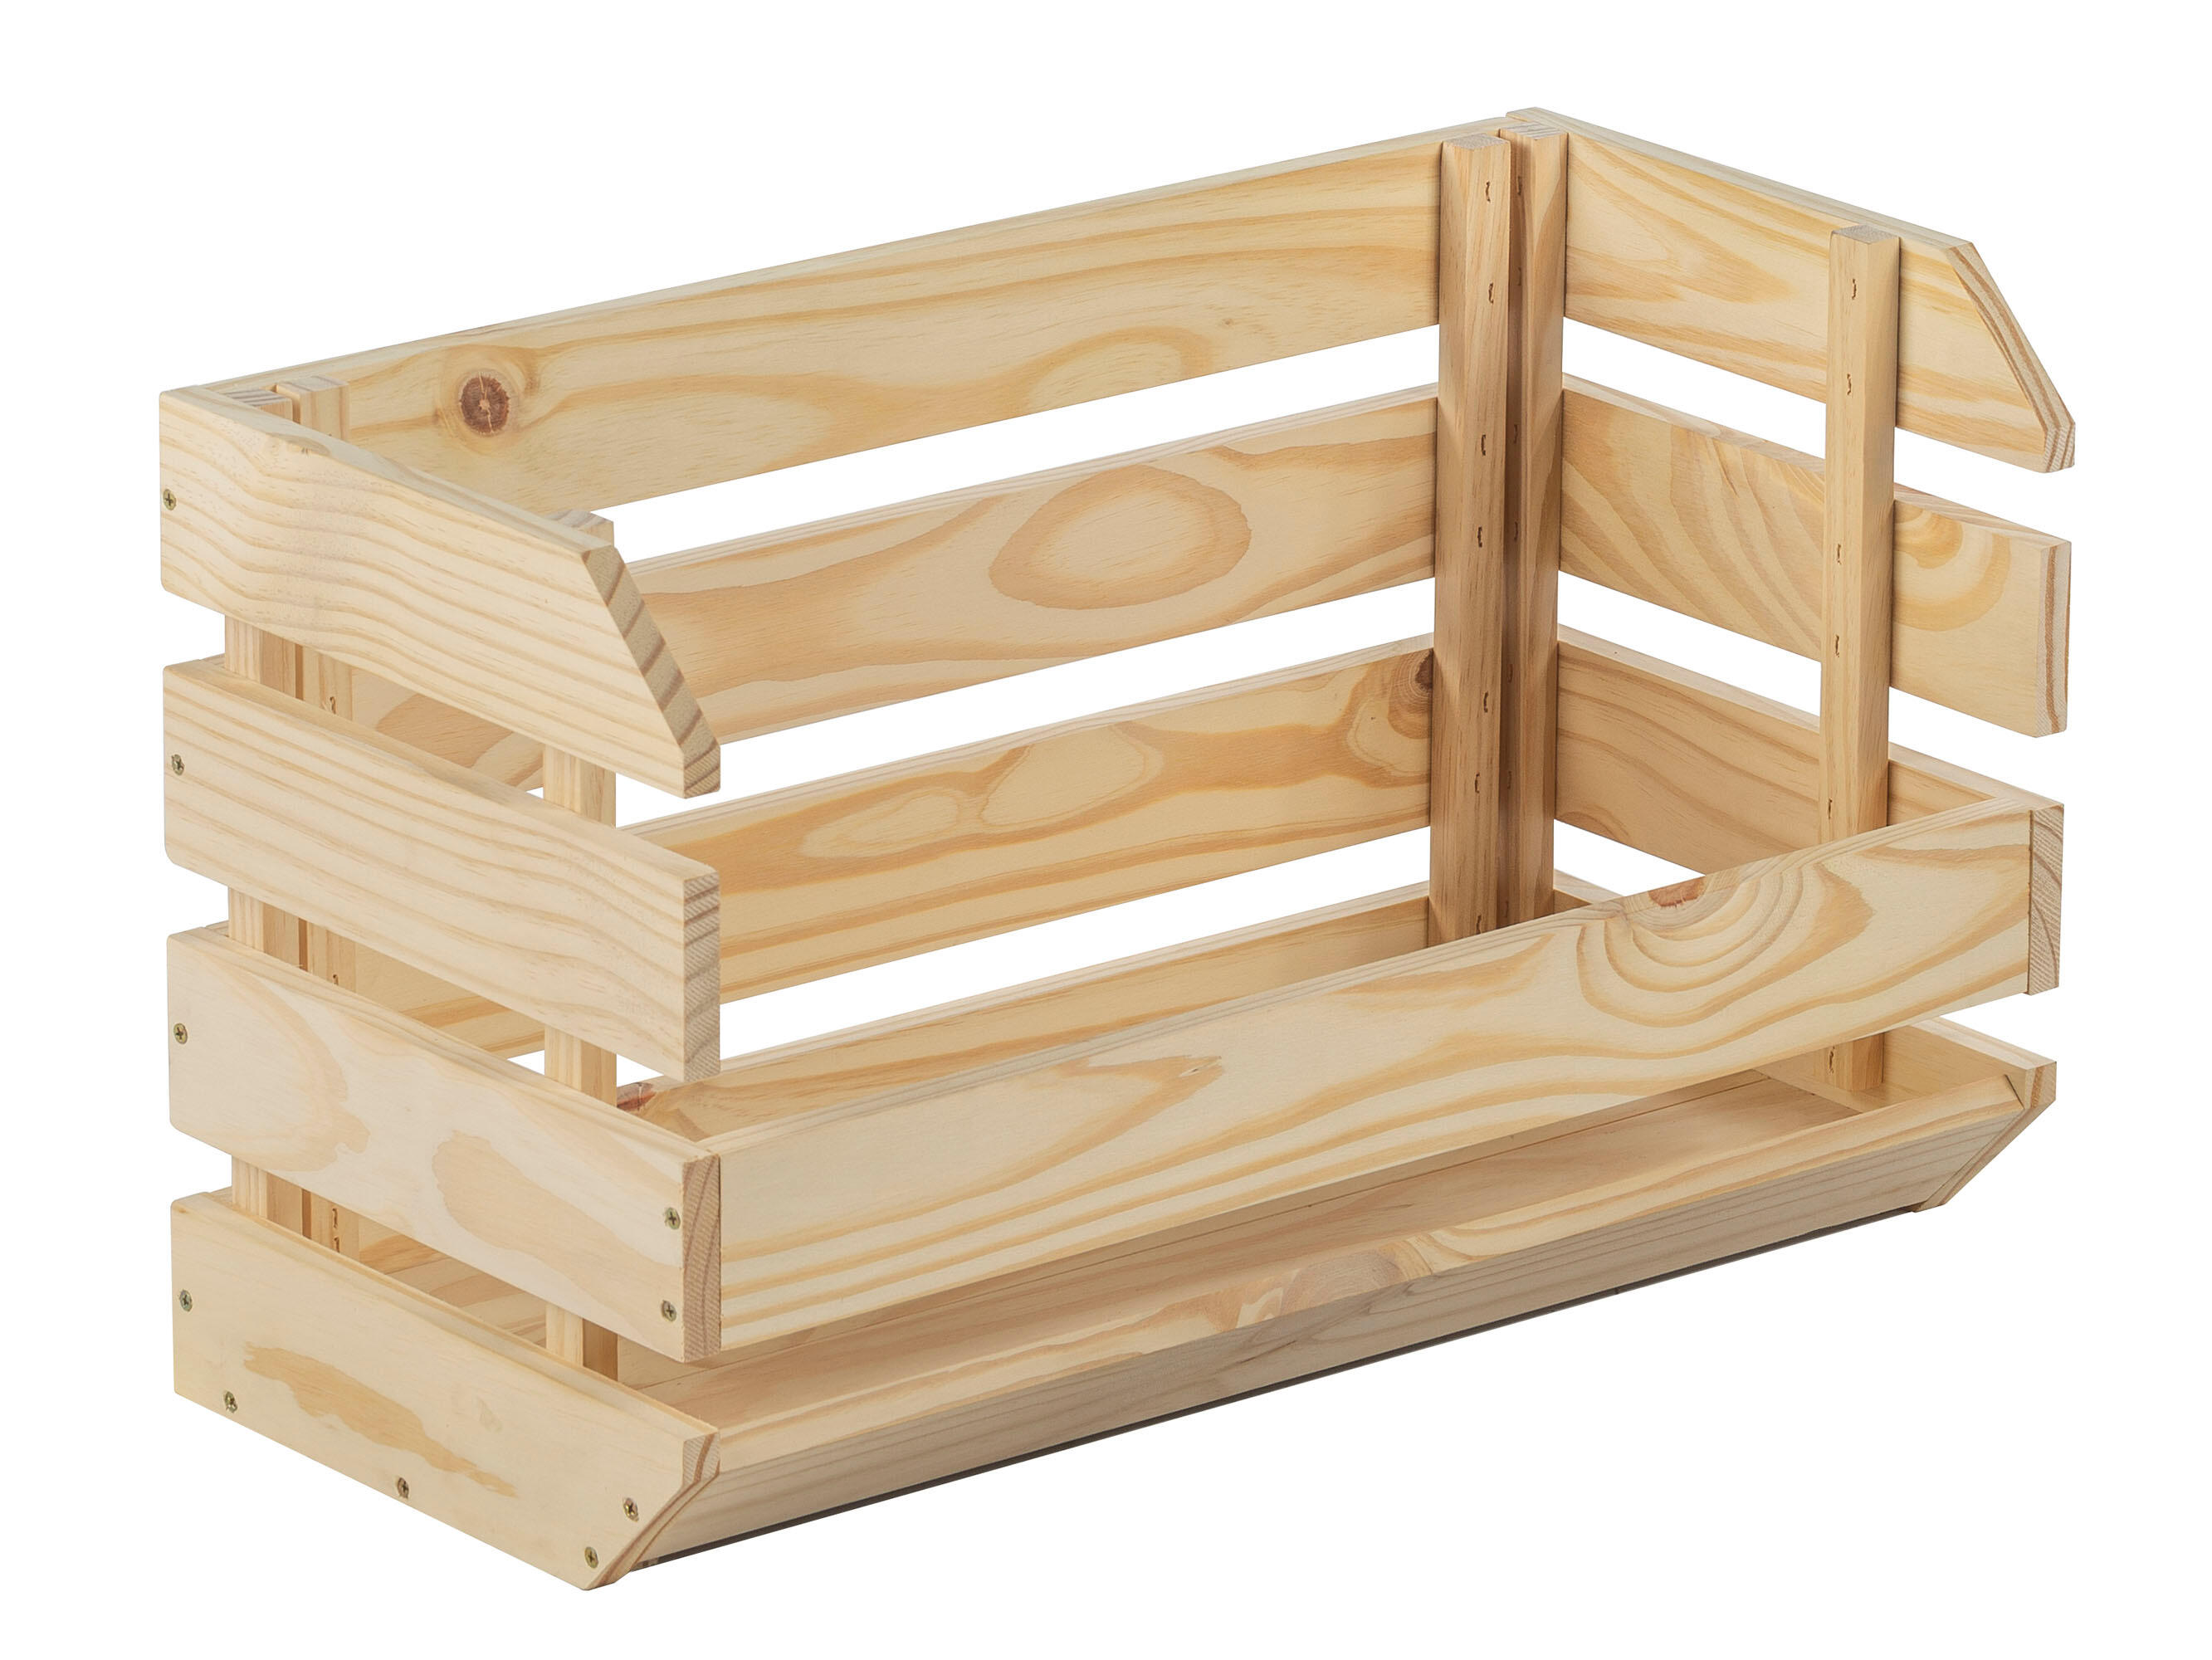 Caja apilable resistente de madera de pino 35,3x60x28,5cm